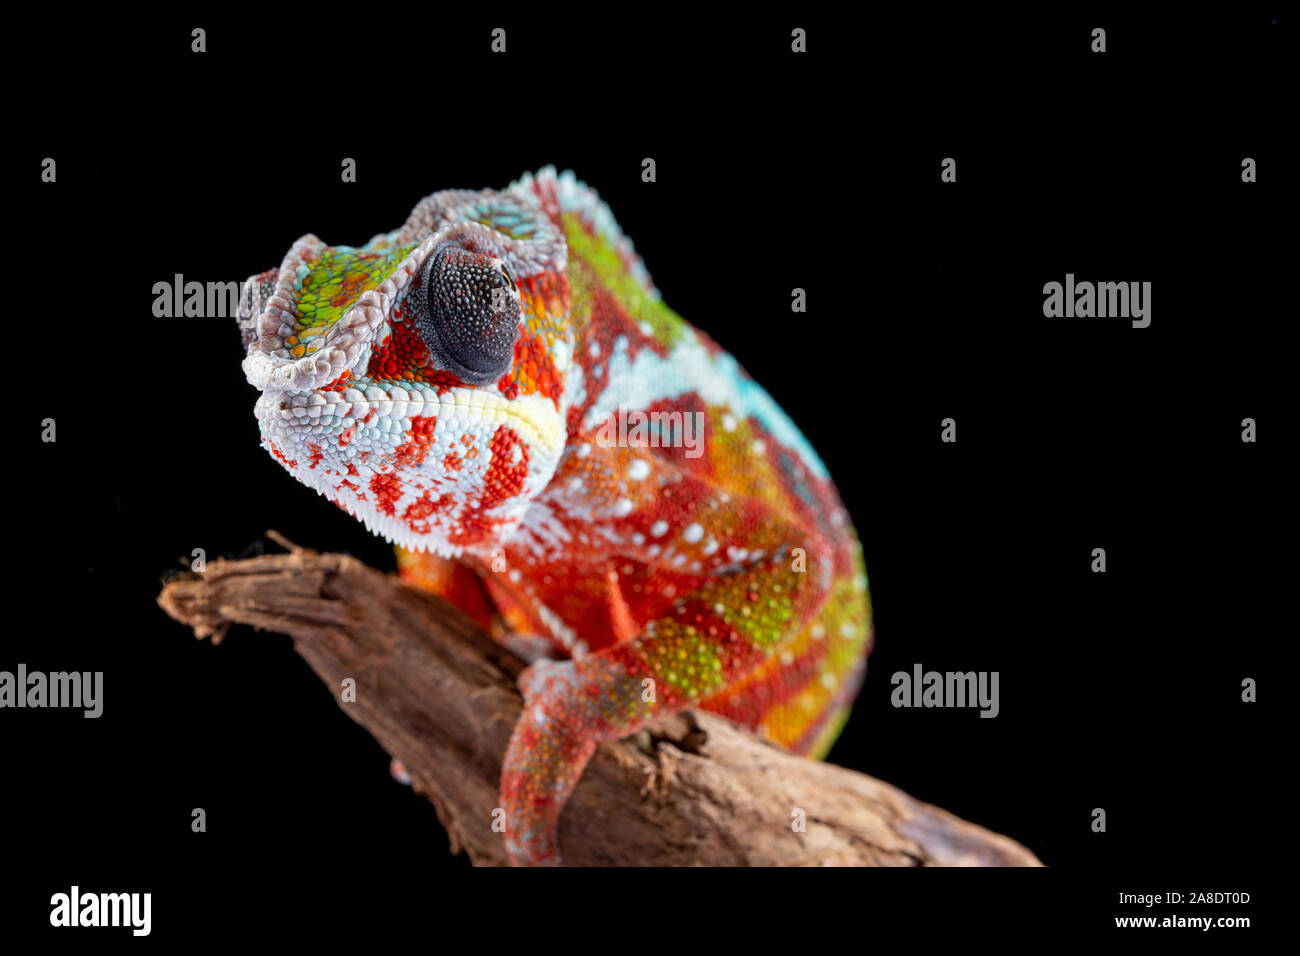 Panter Chameleon, furcifer pardalis, photographed on a plain background Stock Photo